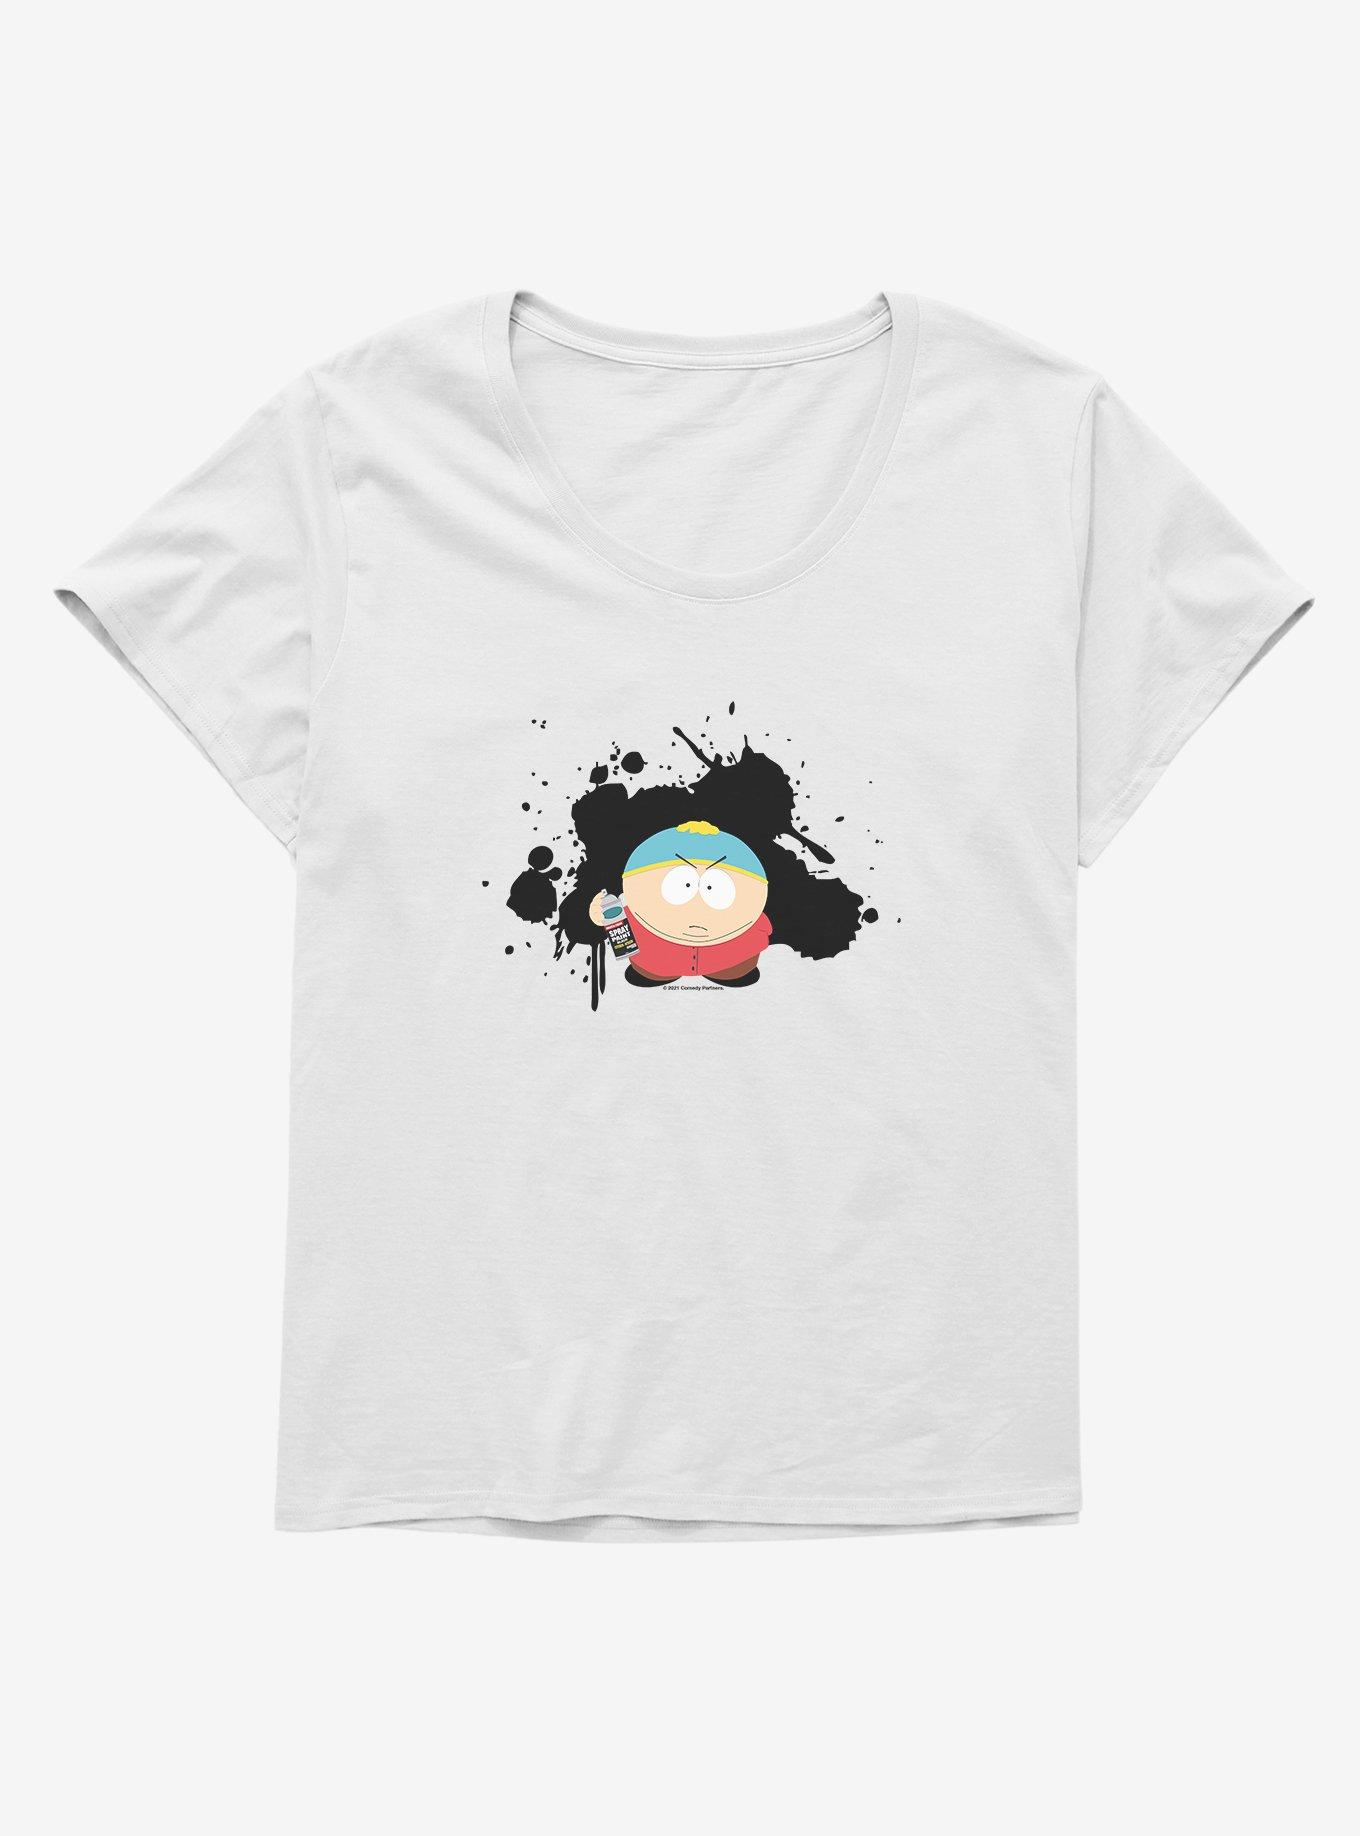 South Park Season Reference Cartman Spray Paint Girls T-Shirt Plus Size, , hi-res